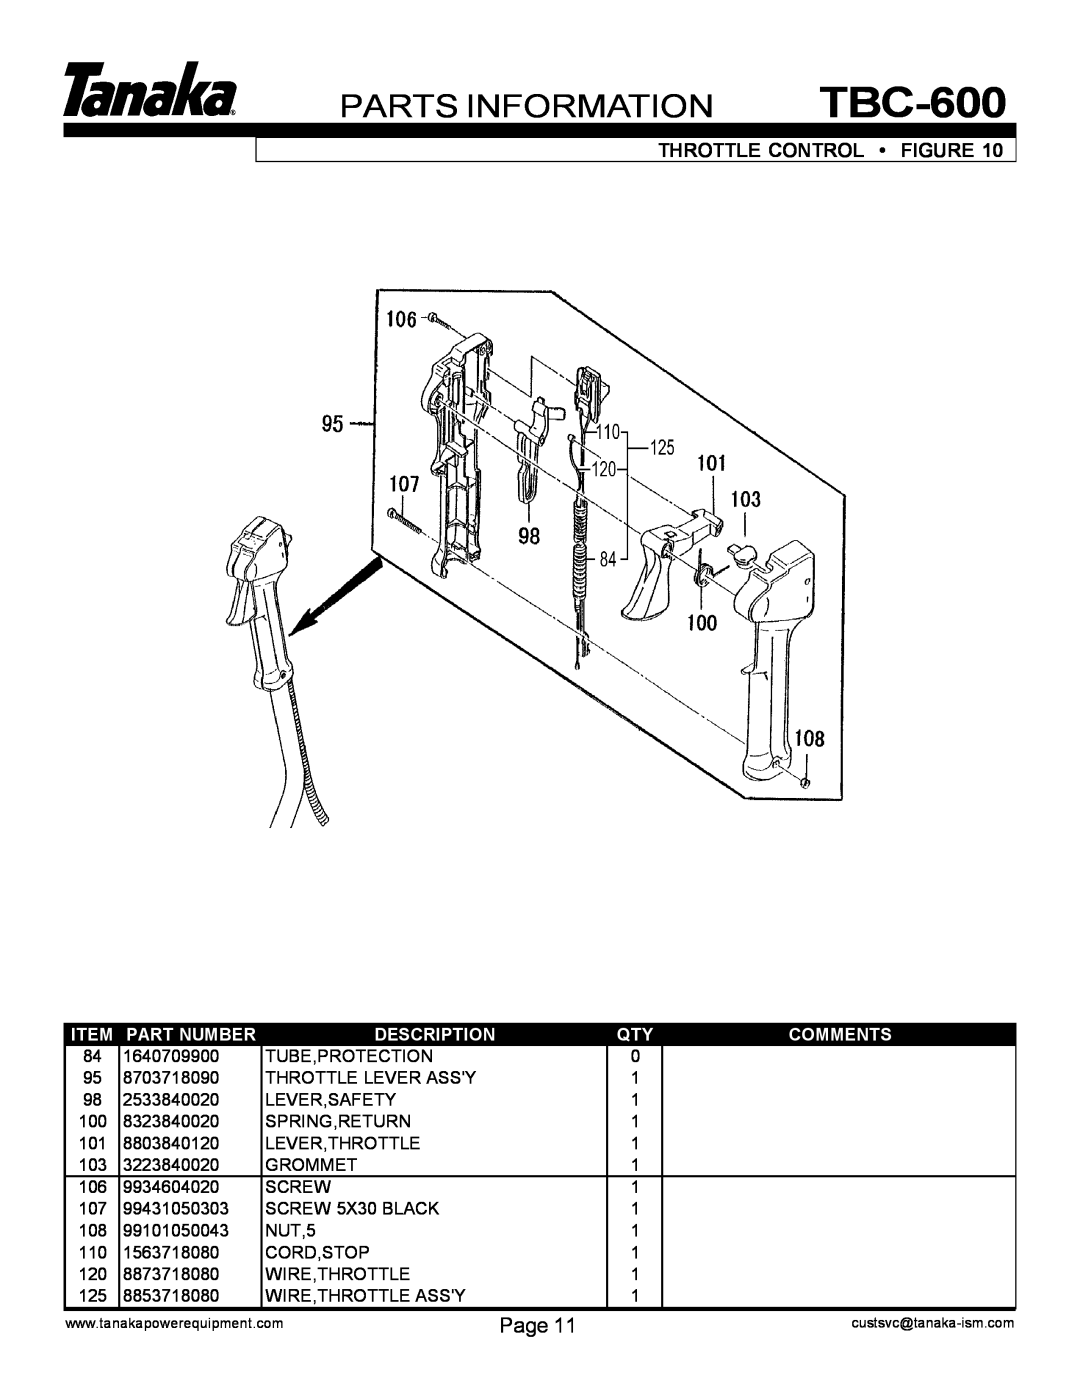 Tanaka TBC-600 manual Throttle Control Figure, Parts Information, Page, Item Part Number, Description, Comments 